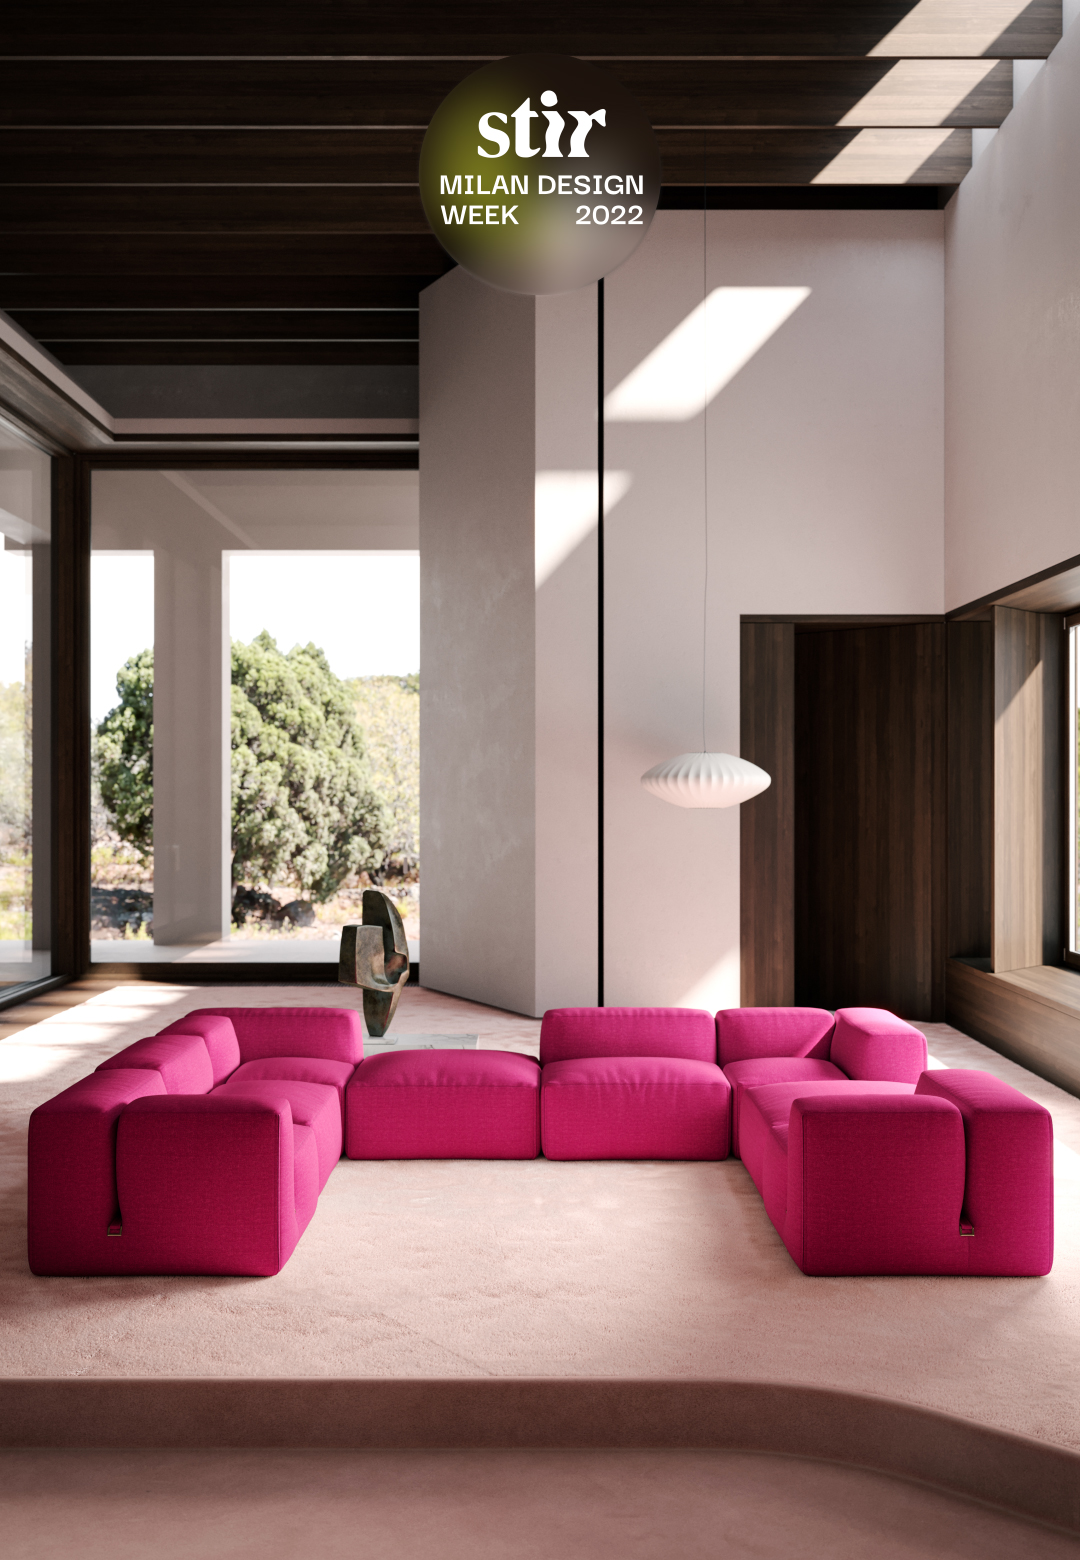 Tacchini announces revised edition of Le Mura sofa by Mario Bellini